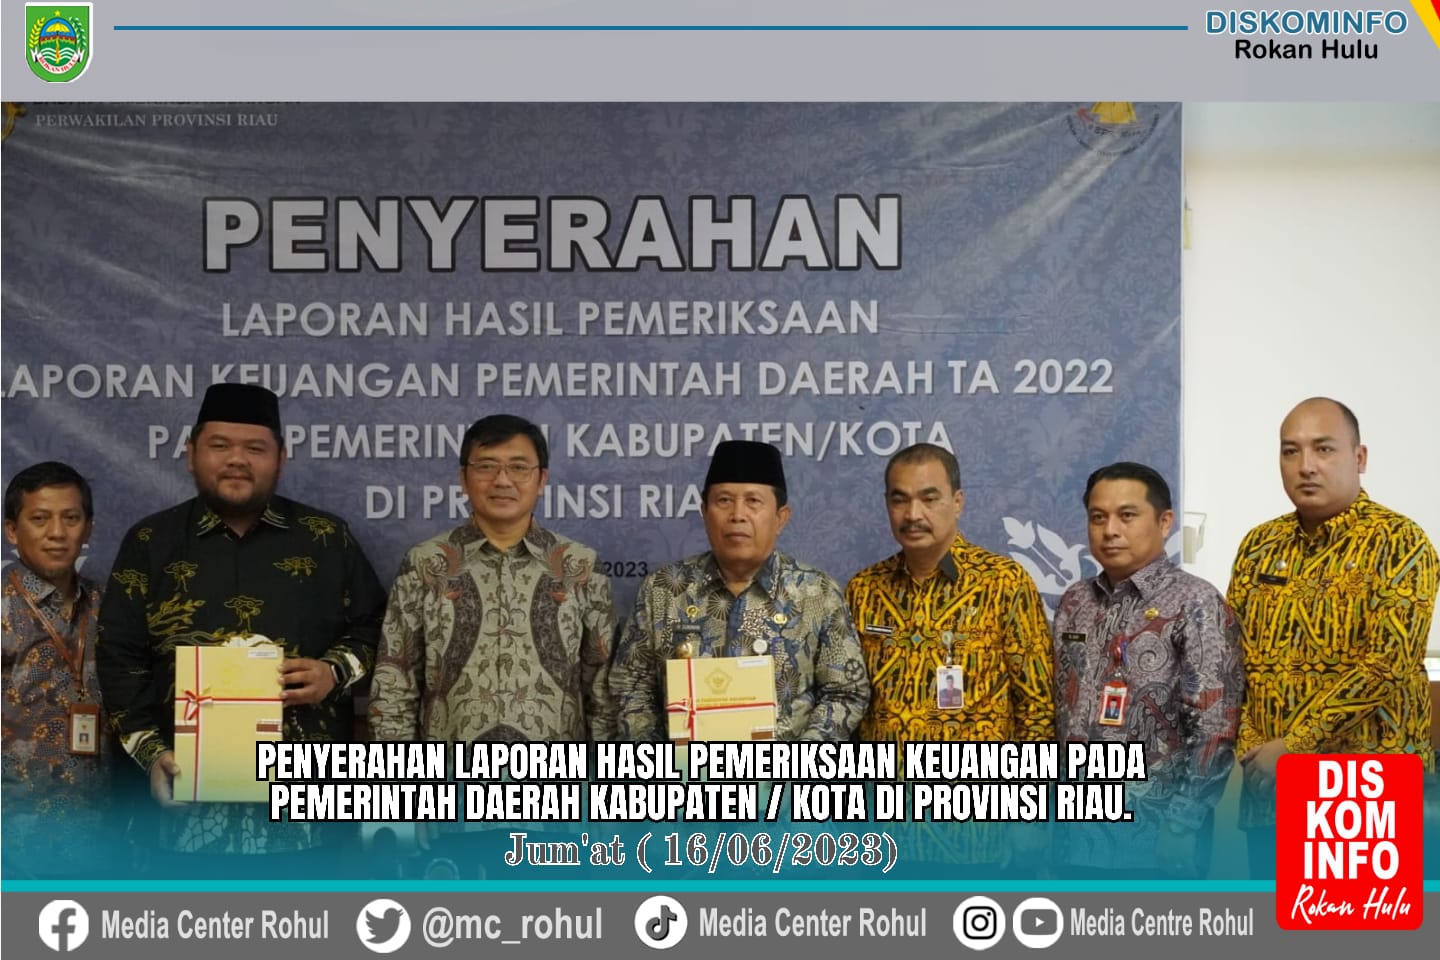 Bupati Sukiman Terima LHP LKPD 2022, Pemkab Rohul Kembali Raih Opini WTP dari BPK RI 7 Kali Berturut-Turut